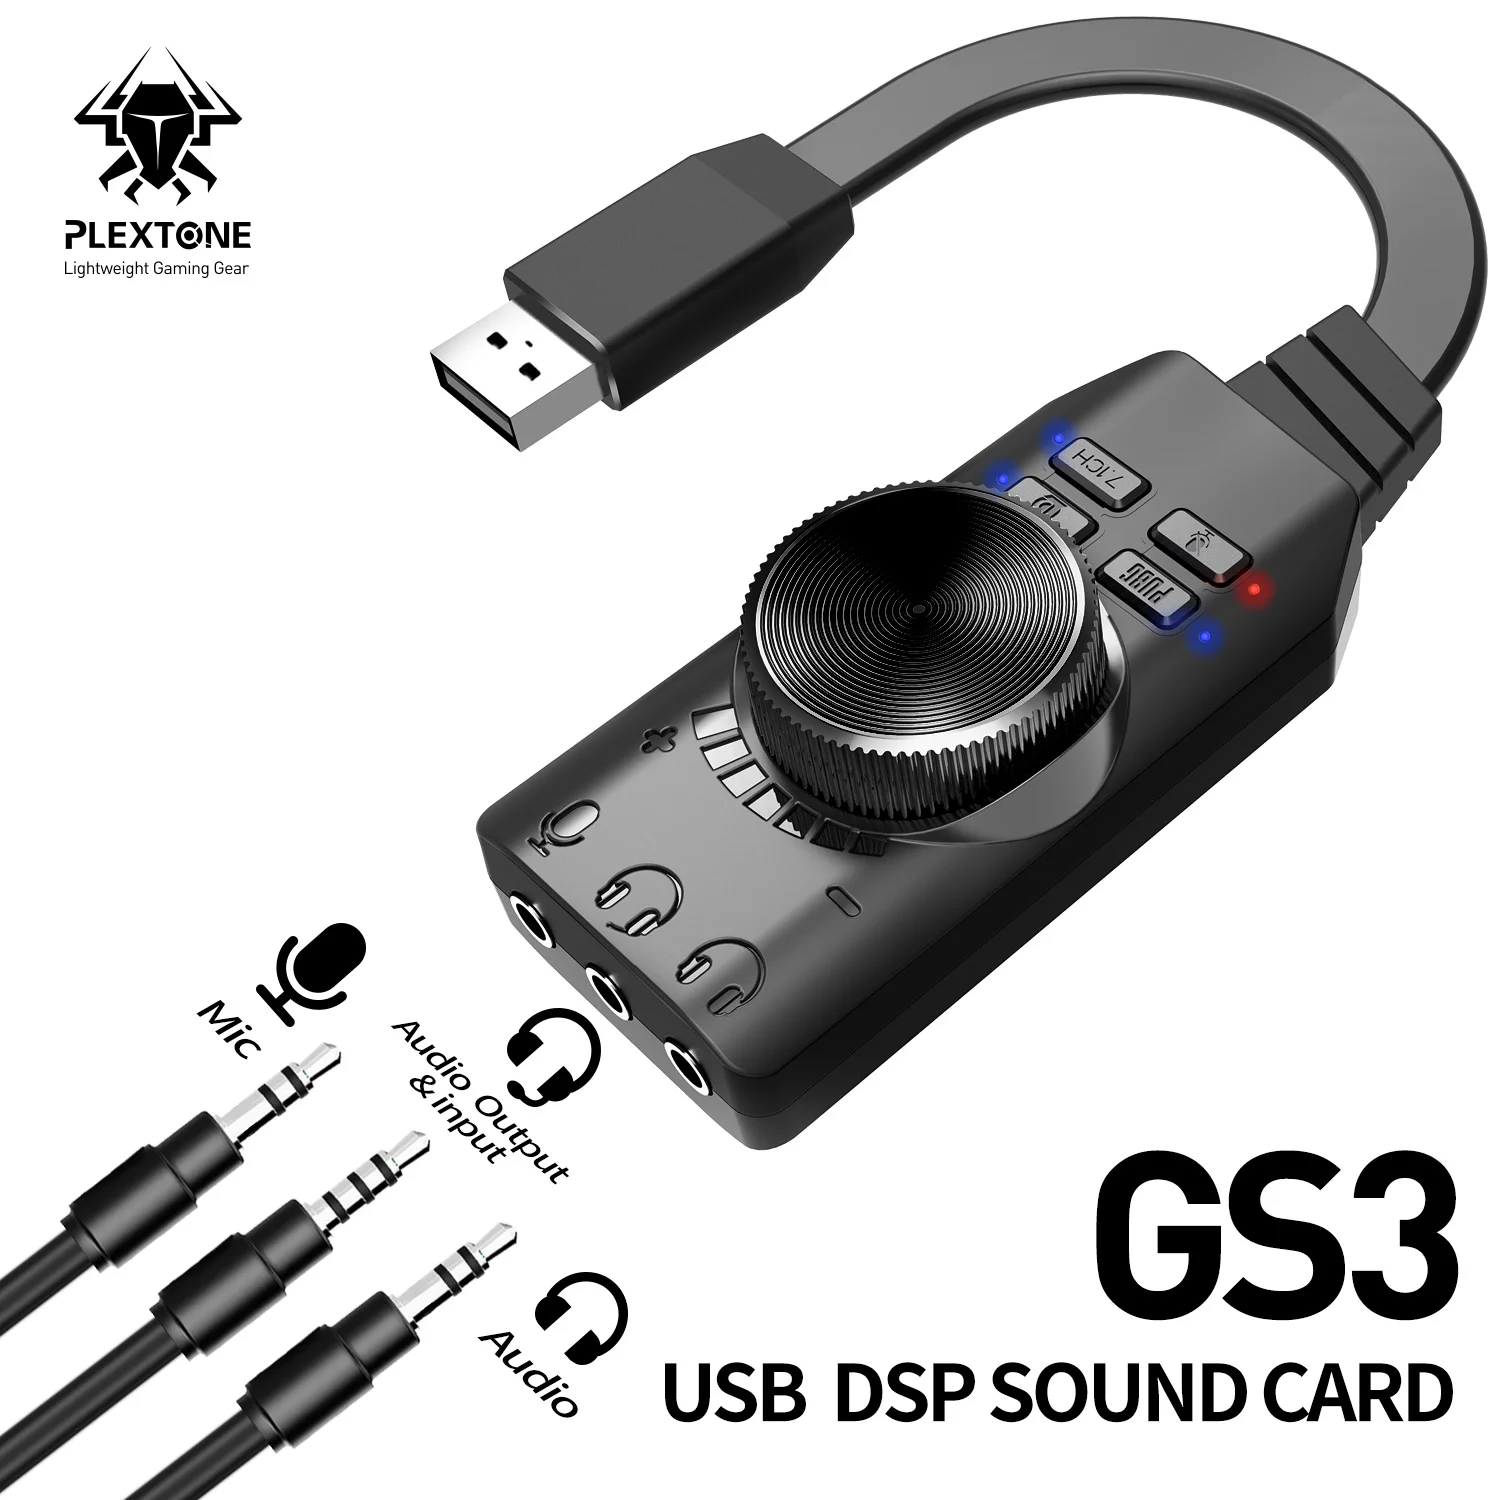 USB Sound Card External 3.5mm USB Adapter USB Earphone Headphone Audio Interface 7.1 Sound Card From m.alibaba.com